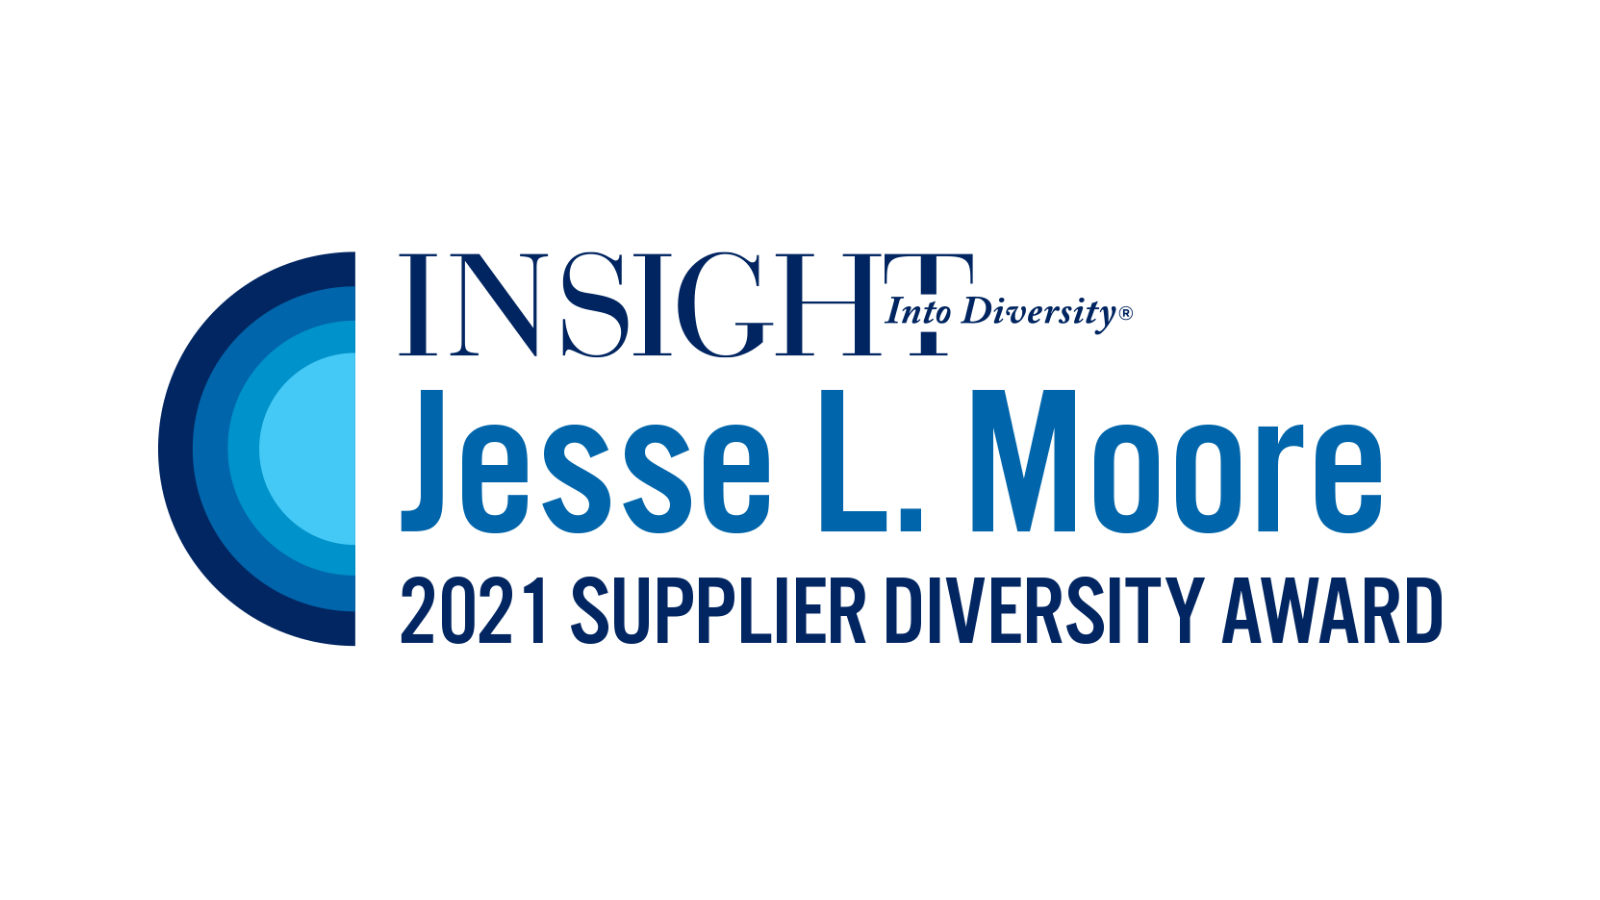 Jesse L. Moore, 2021 Supplier Diversity Award